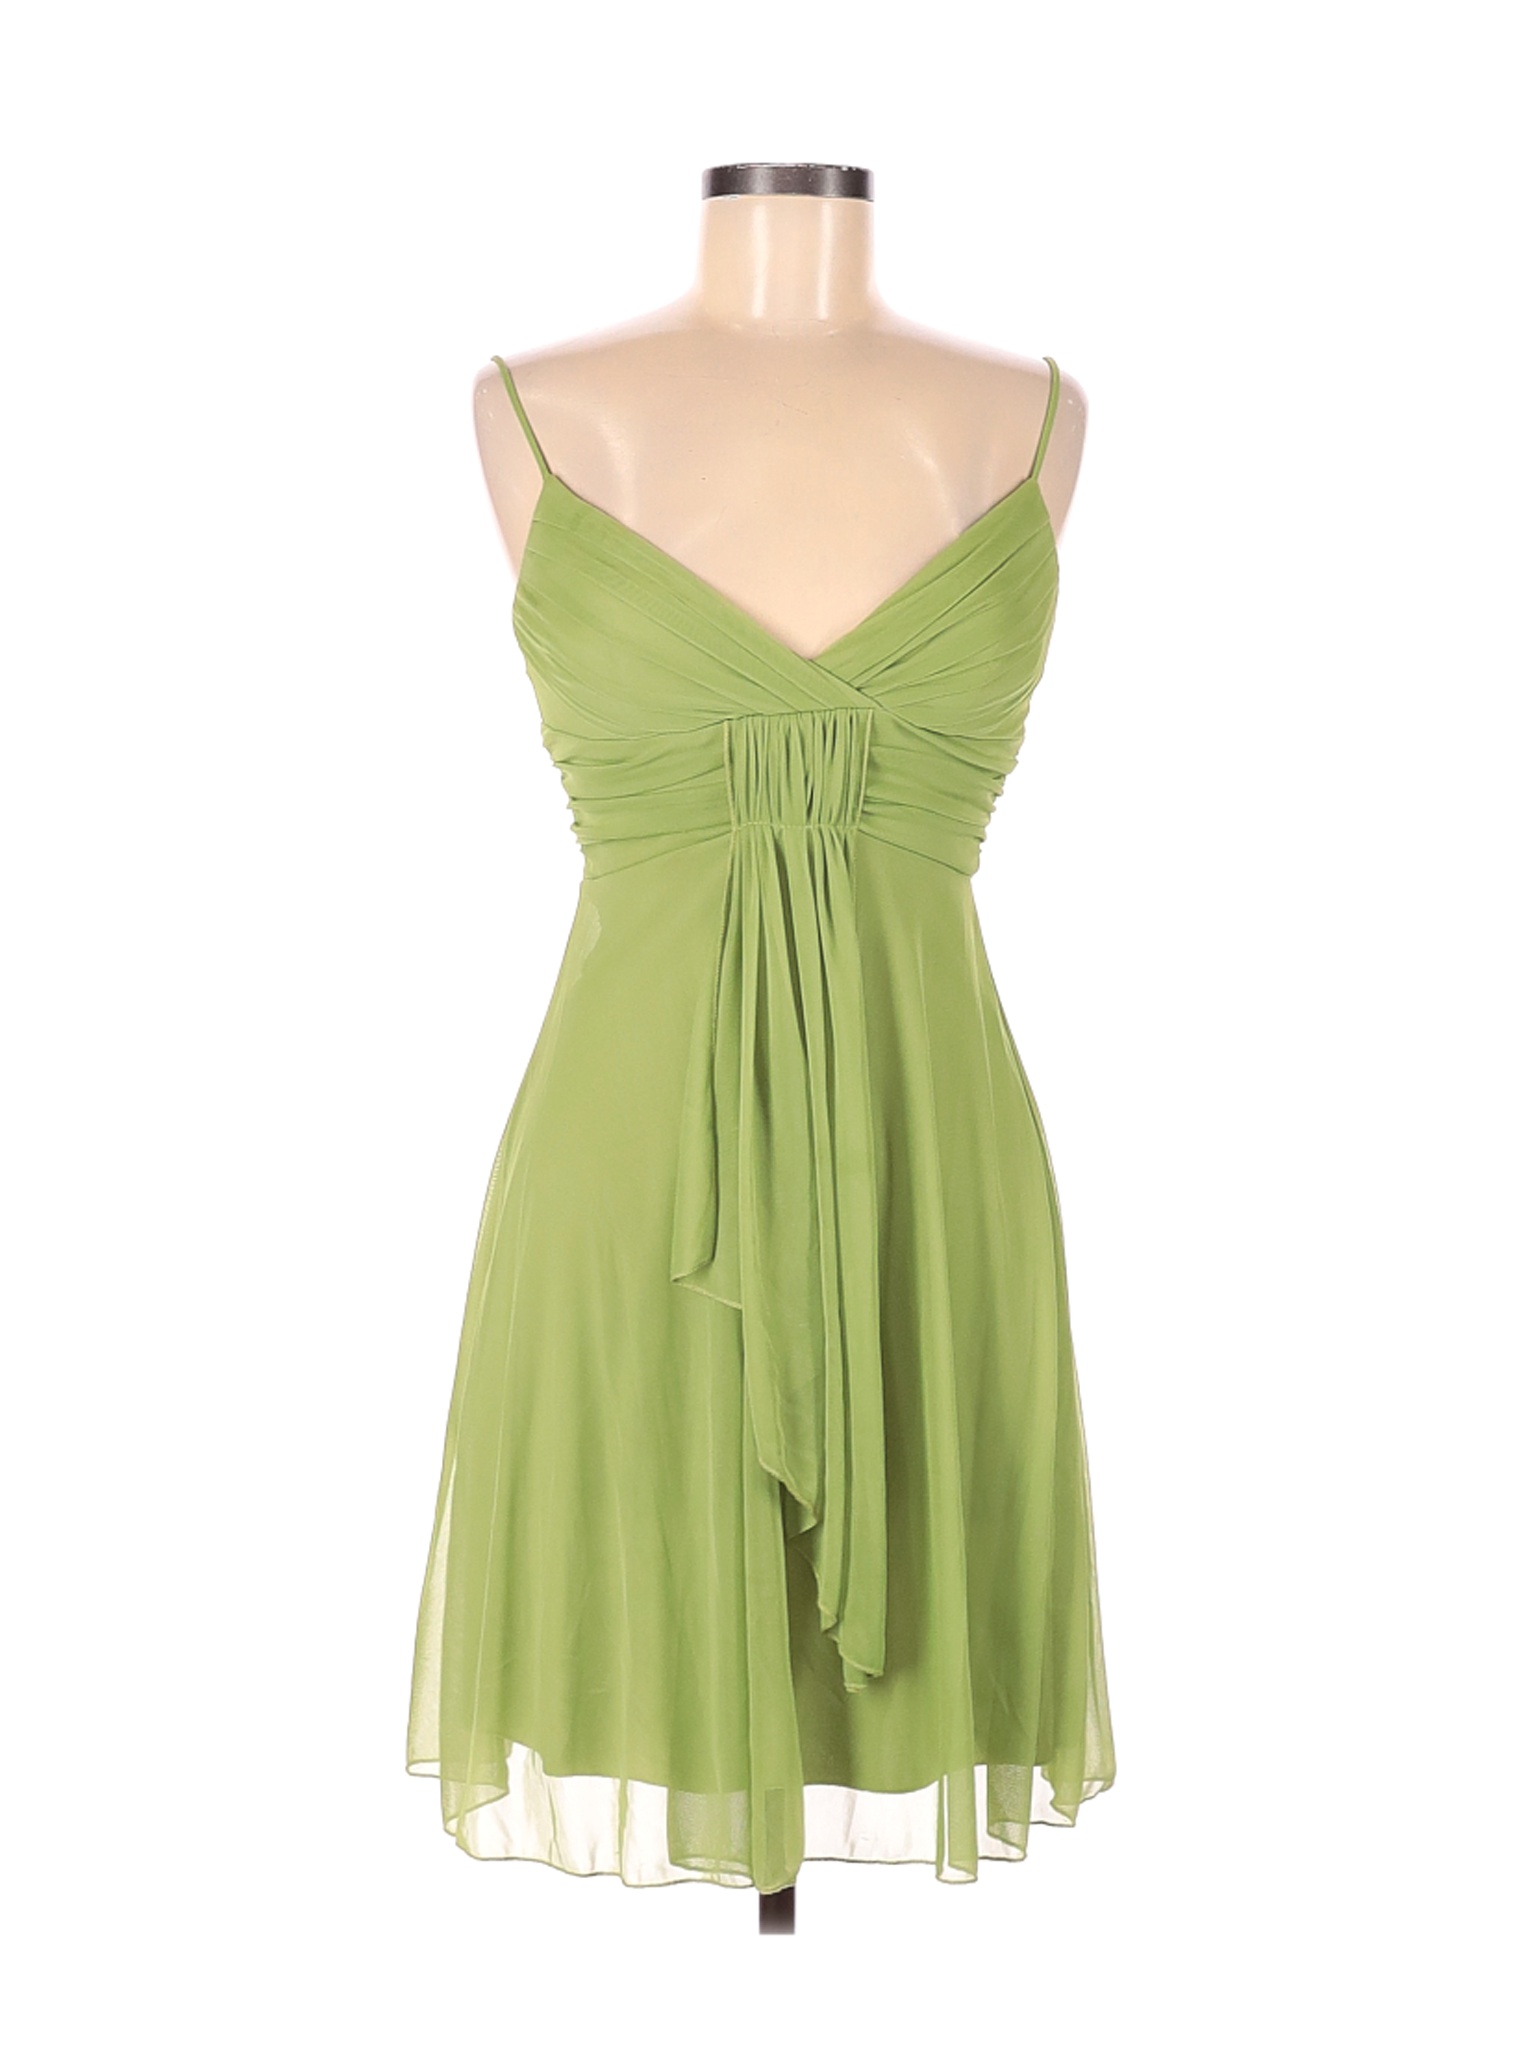 Windsor Women Green Cocktail Dress 5 | eBay